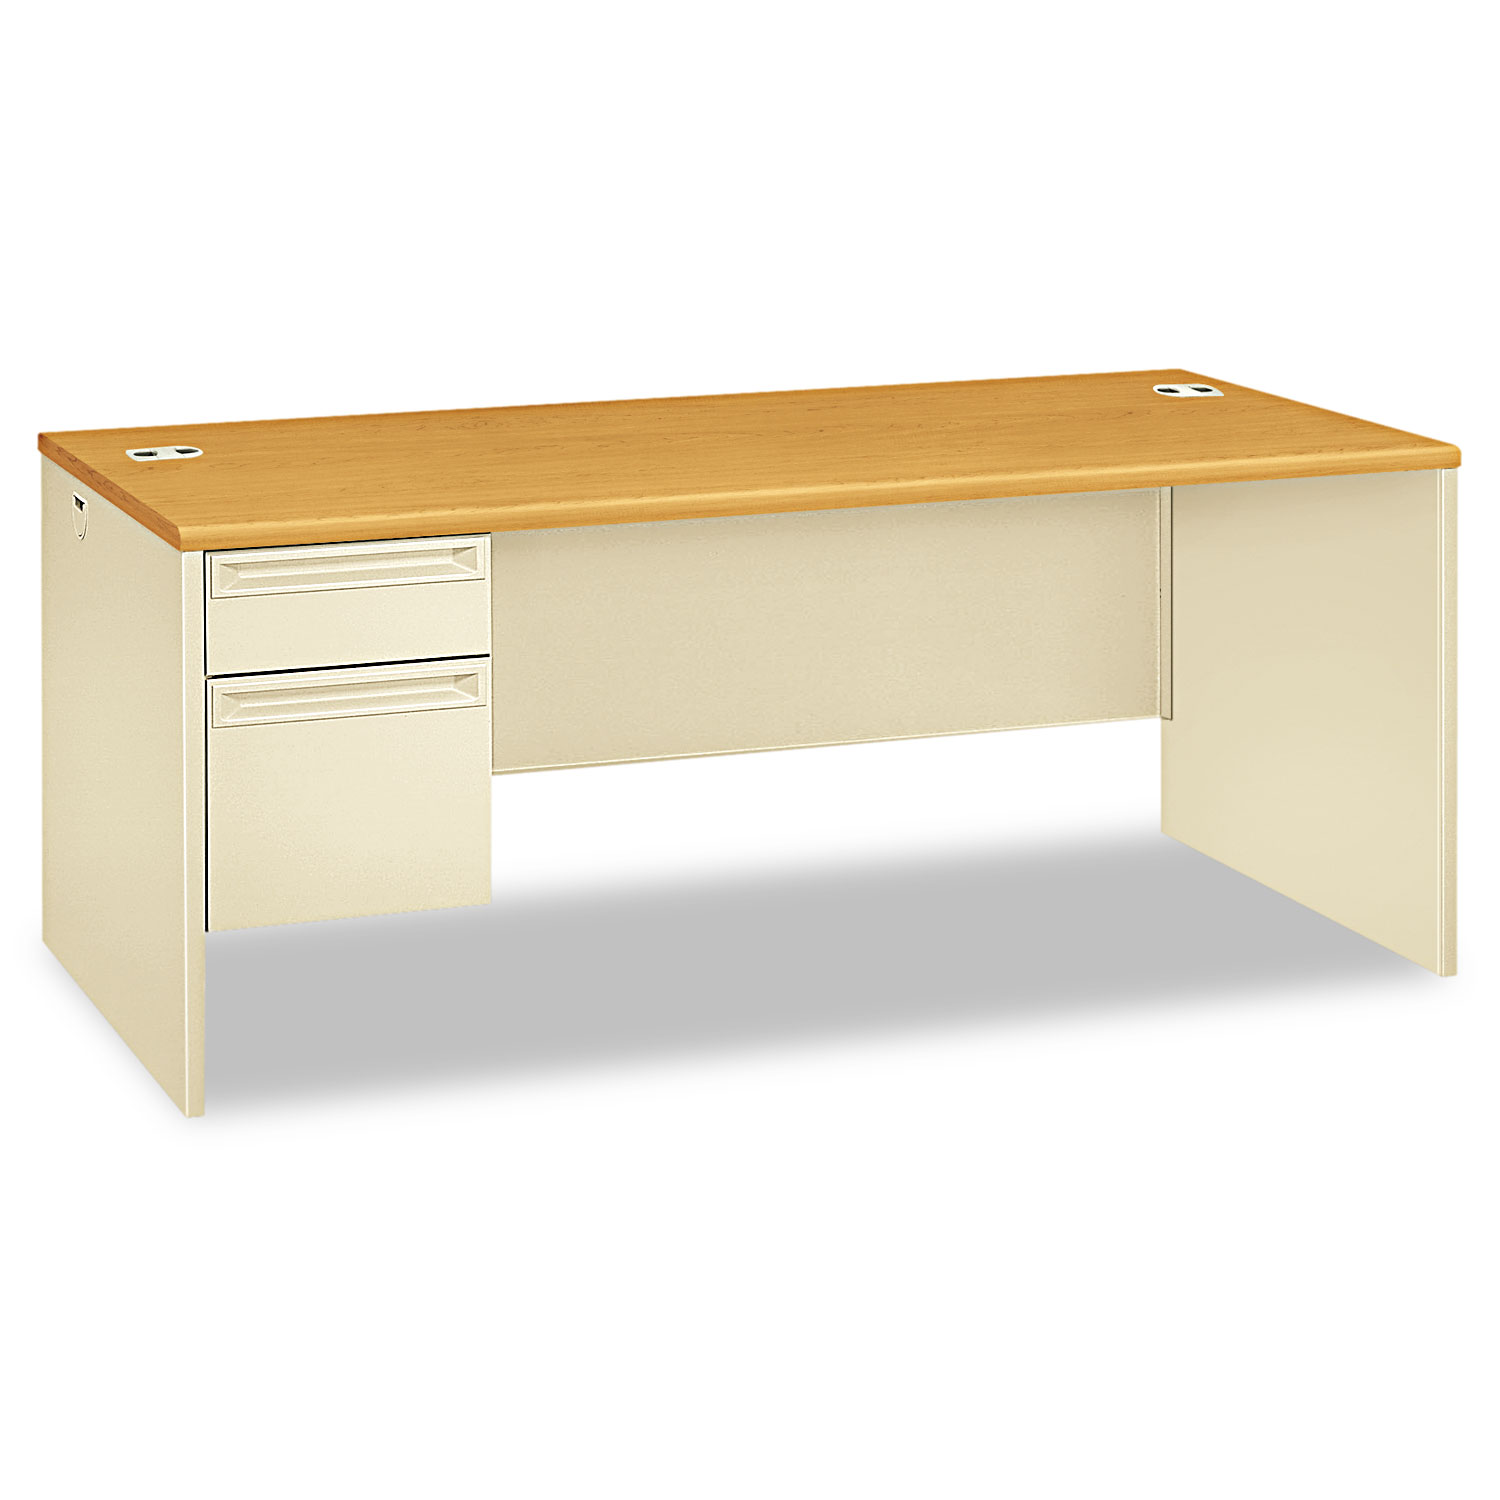  HON H38294L.C.L 38000 Series Left Pedestal Desk, 72w x 36d x 29.5h, Harvest/Putty (HON38294LCL) 